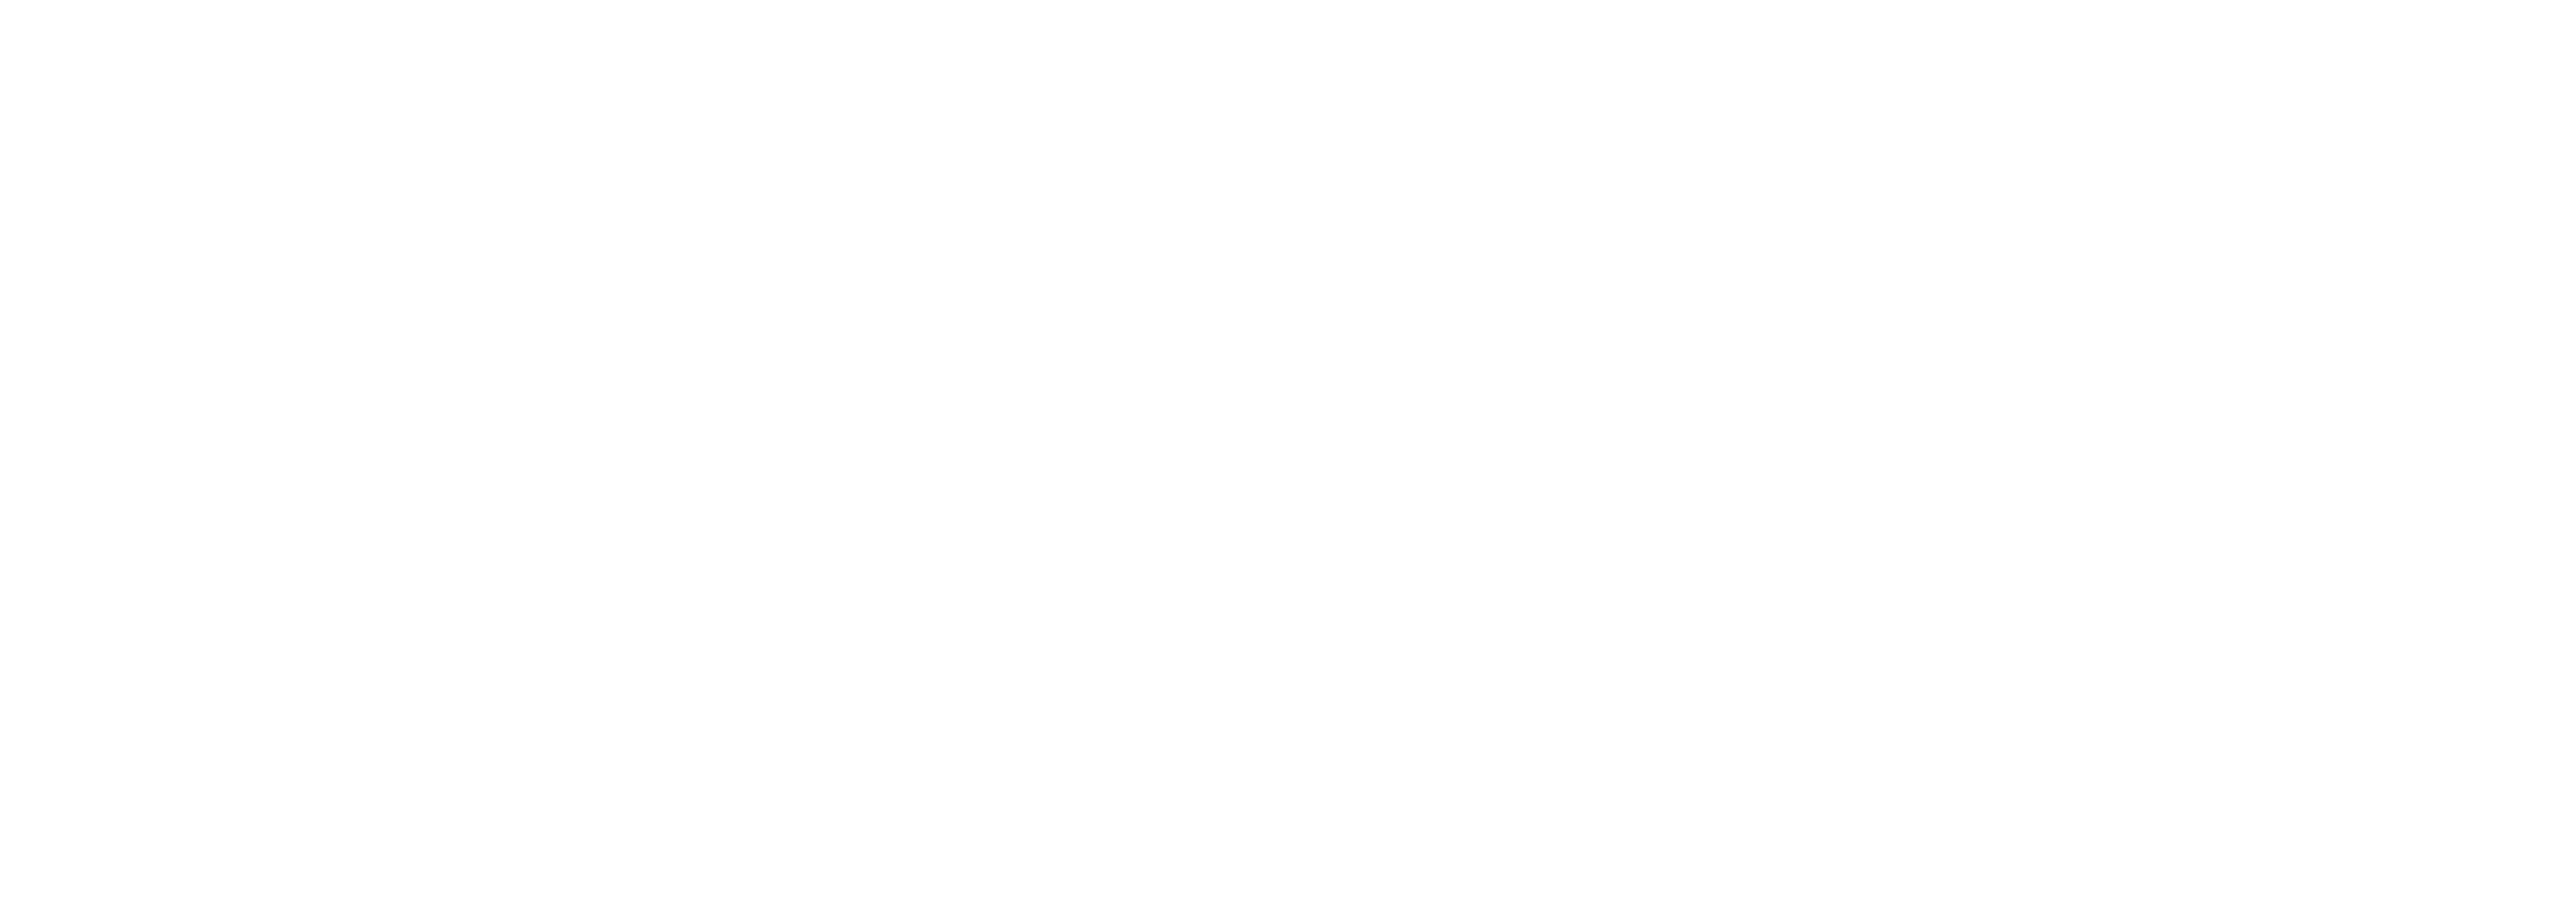 http://okkito.com/my-account/img/logo.png